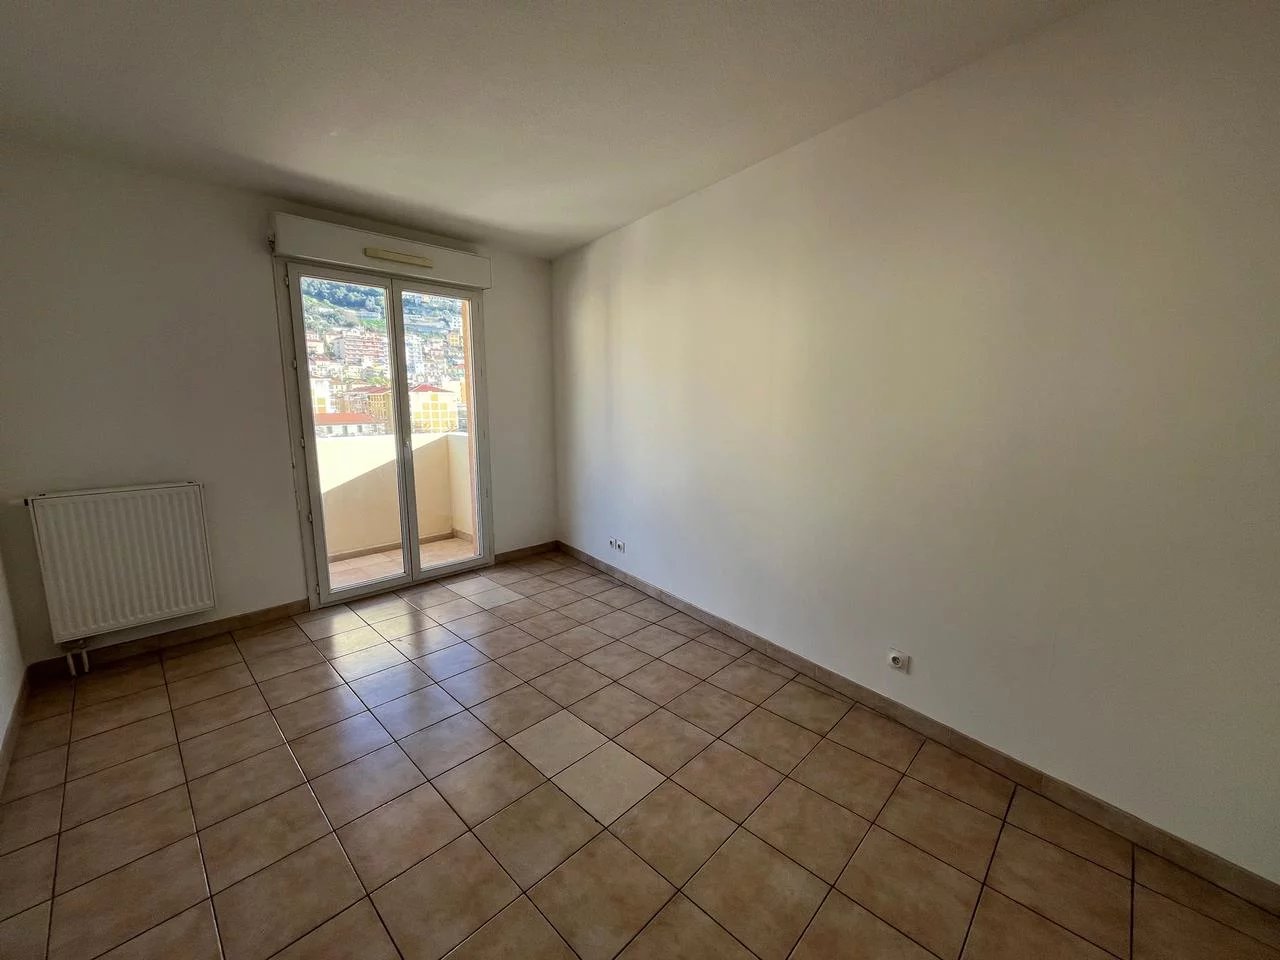 Appartement  3 Locali 62m2  In vendita   250 000 €